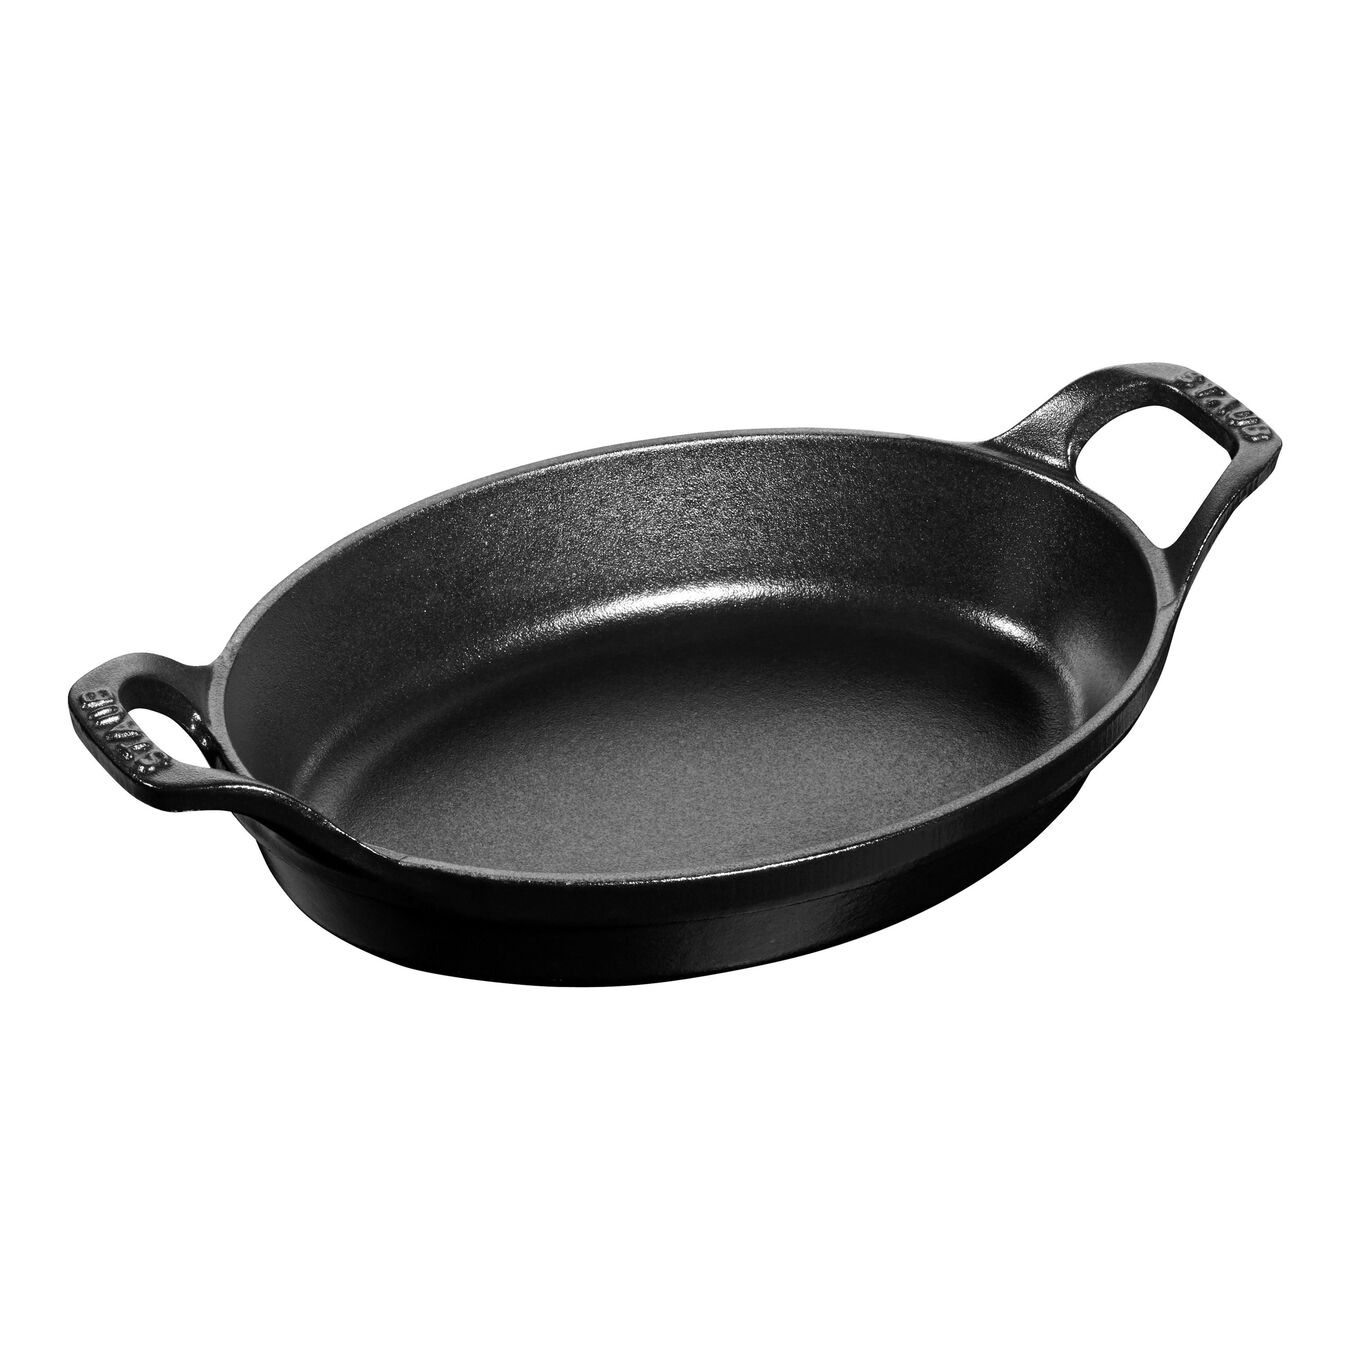  cast iron oval Oven dish, black,,large 2